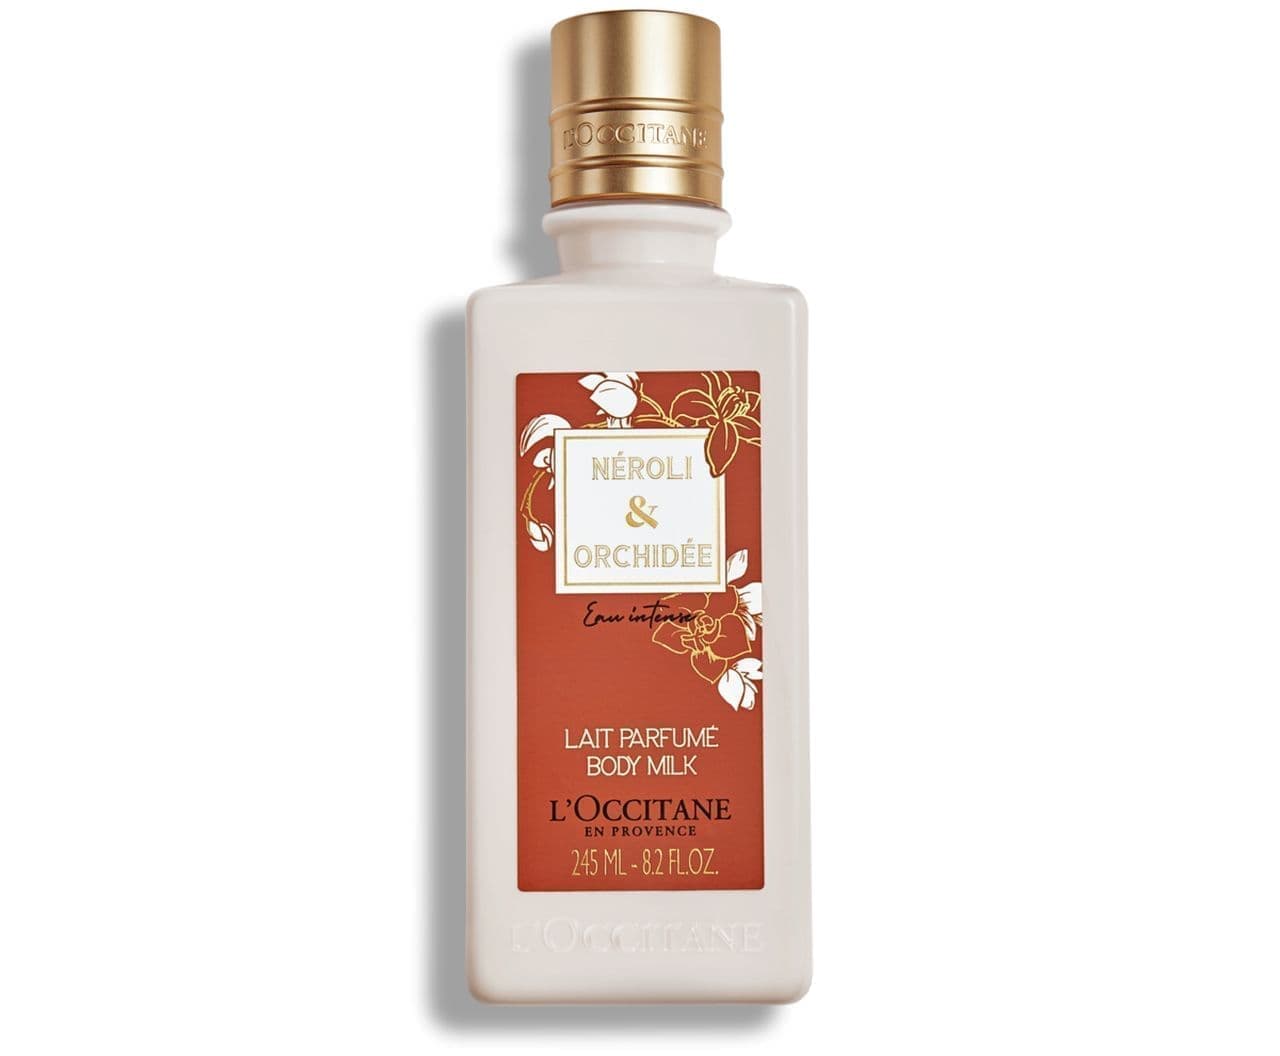 L'Occitane "Grace Orchidee Parfum Moist Milk